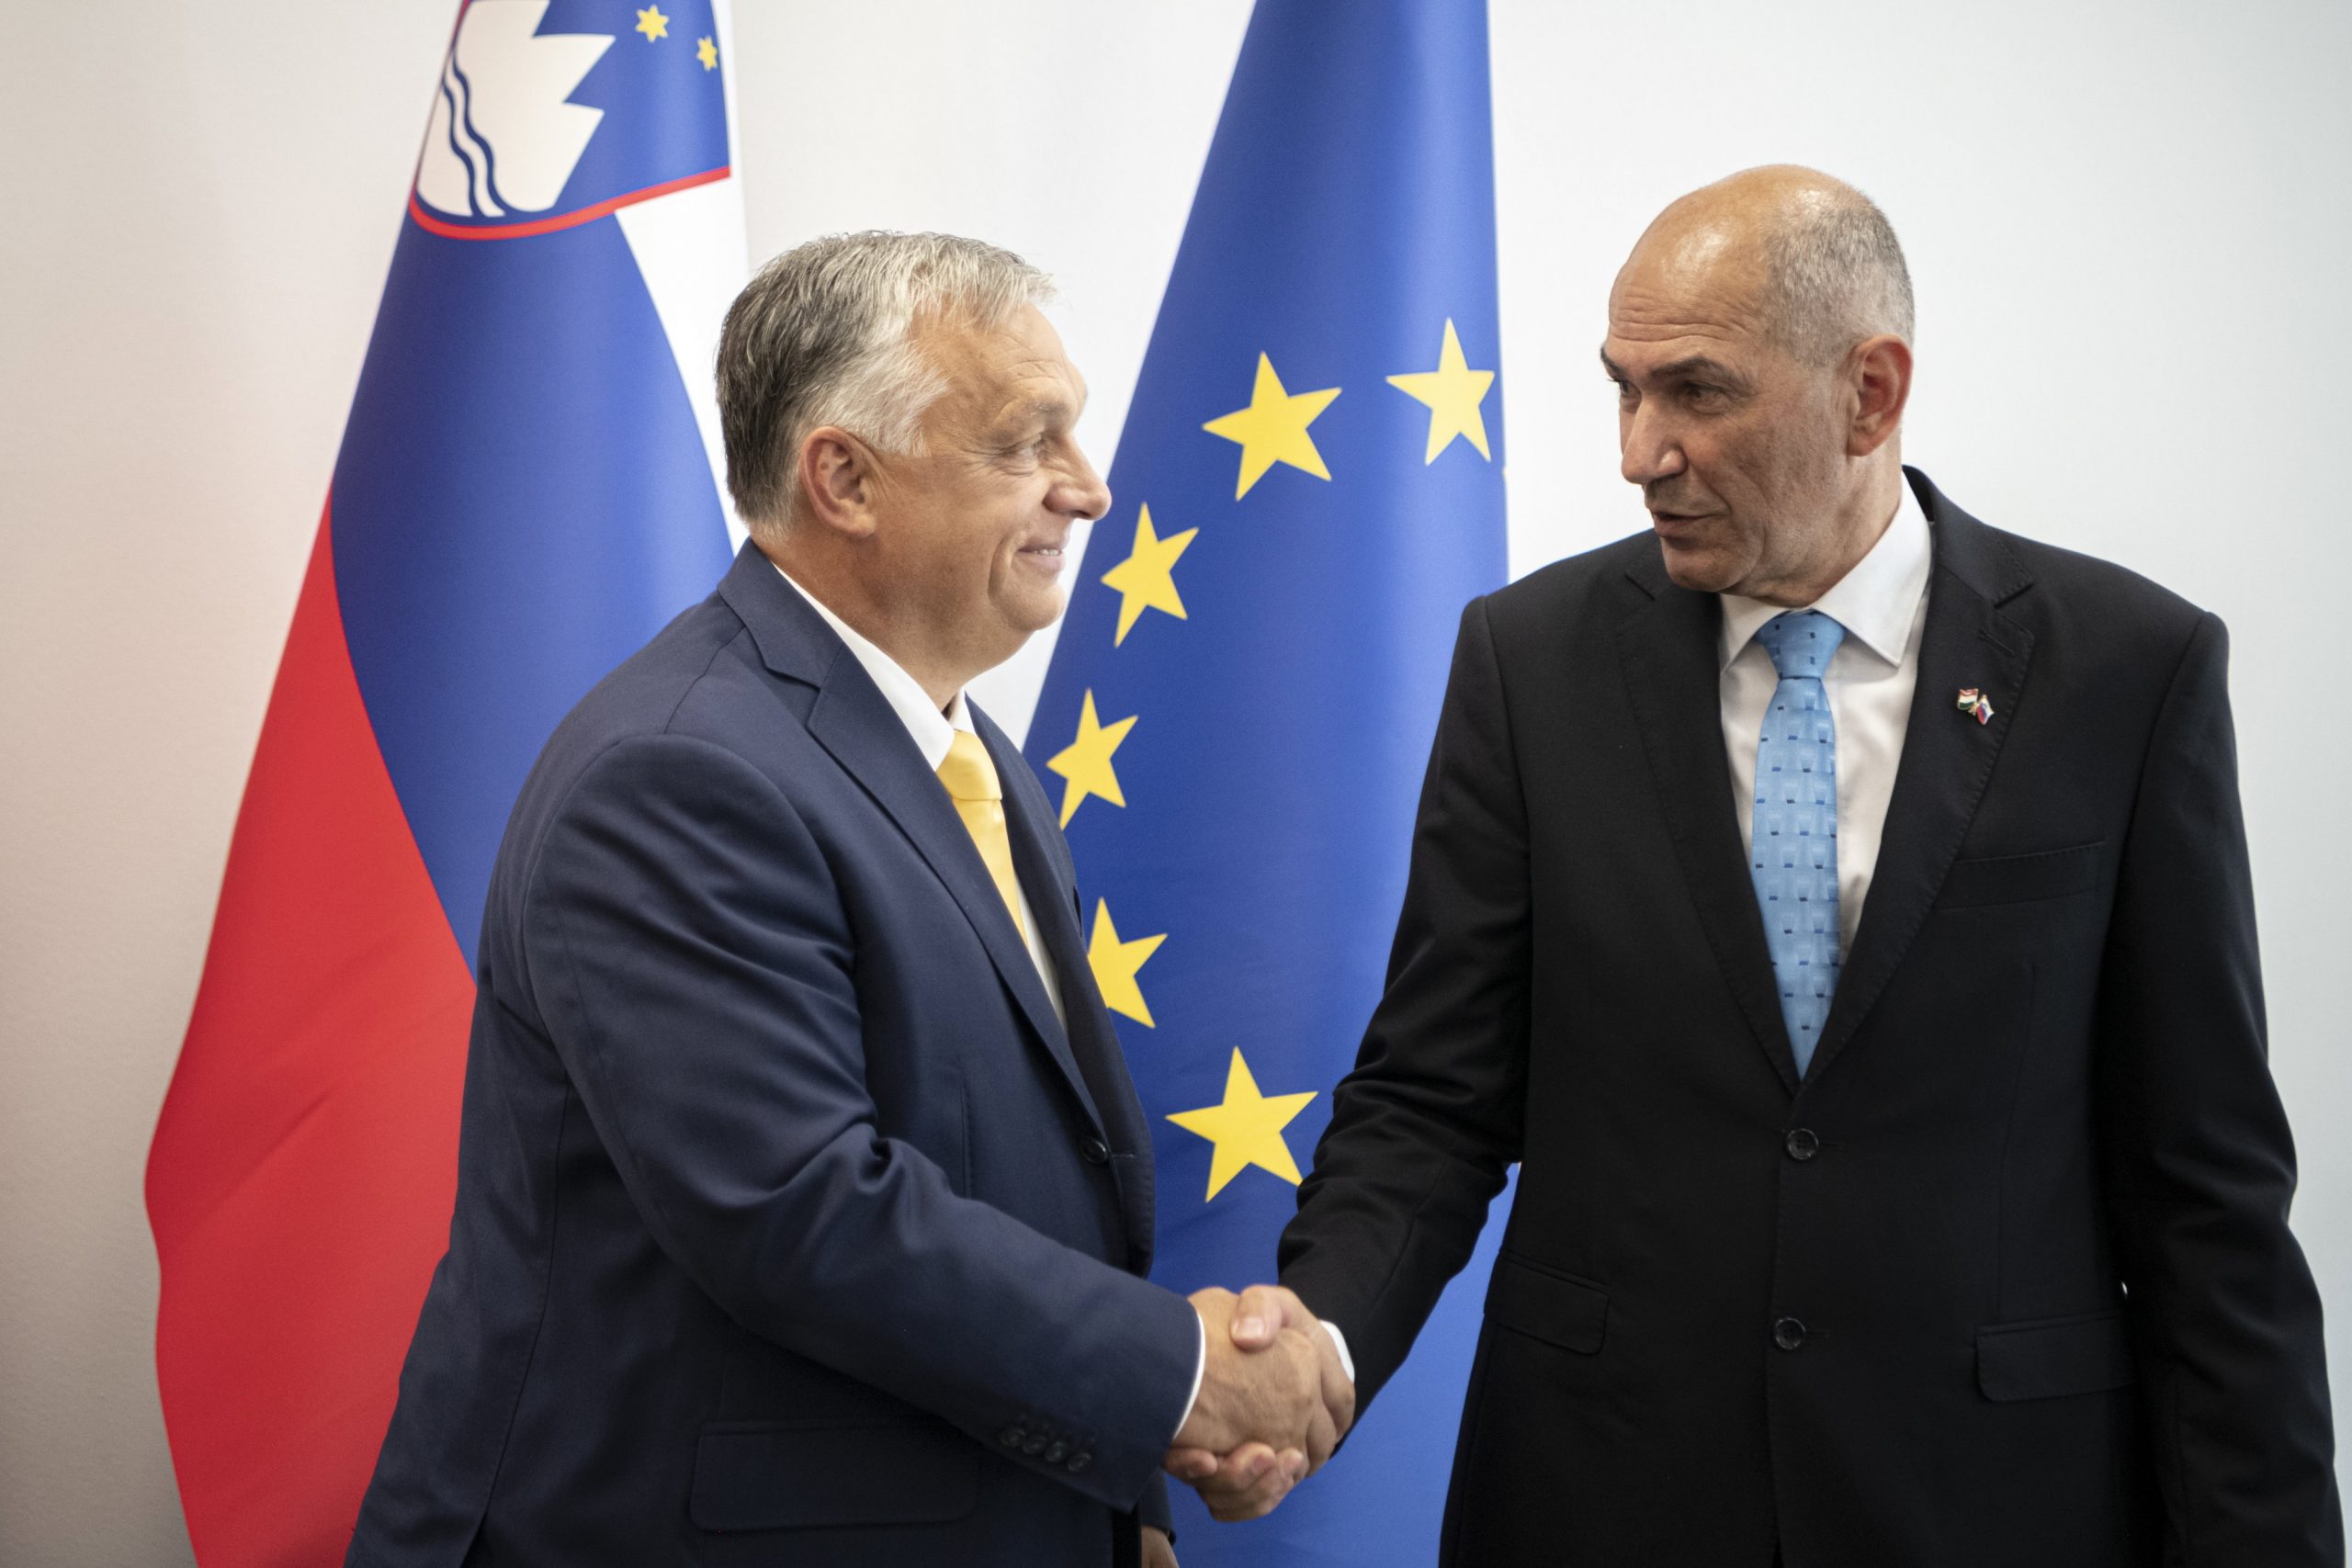 European Politicians Congratulate Orbán on Election Win